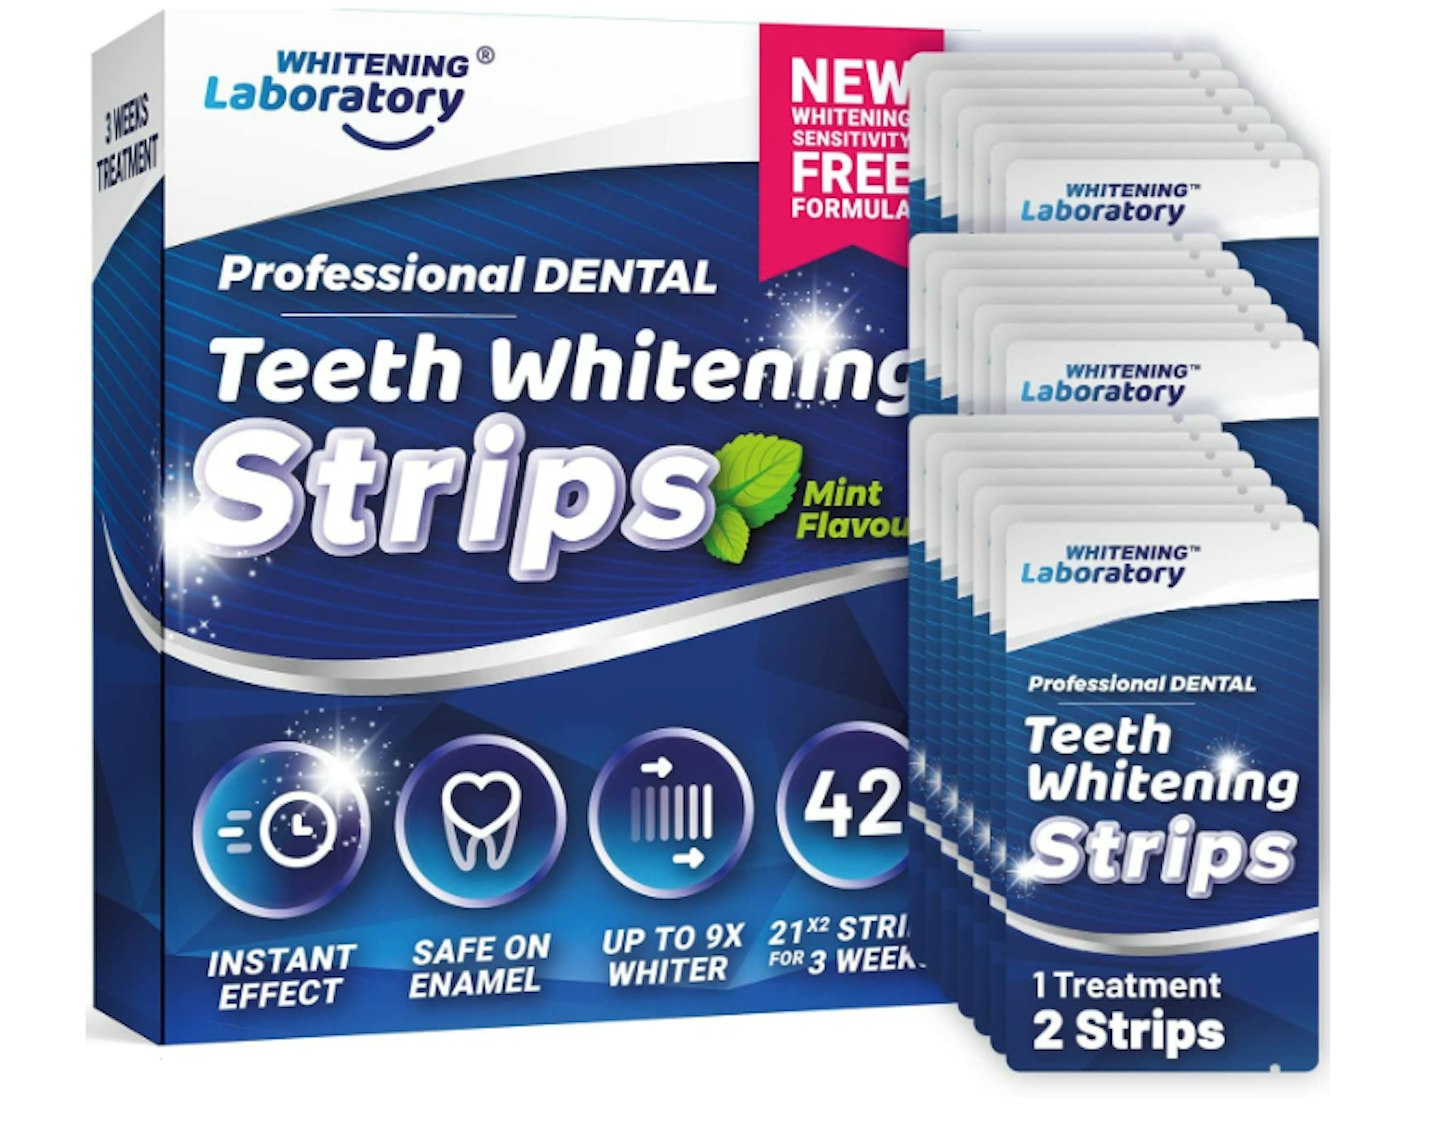  Professional Teeth Whitening Strips